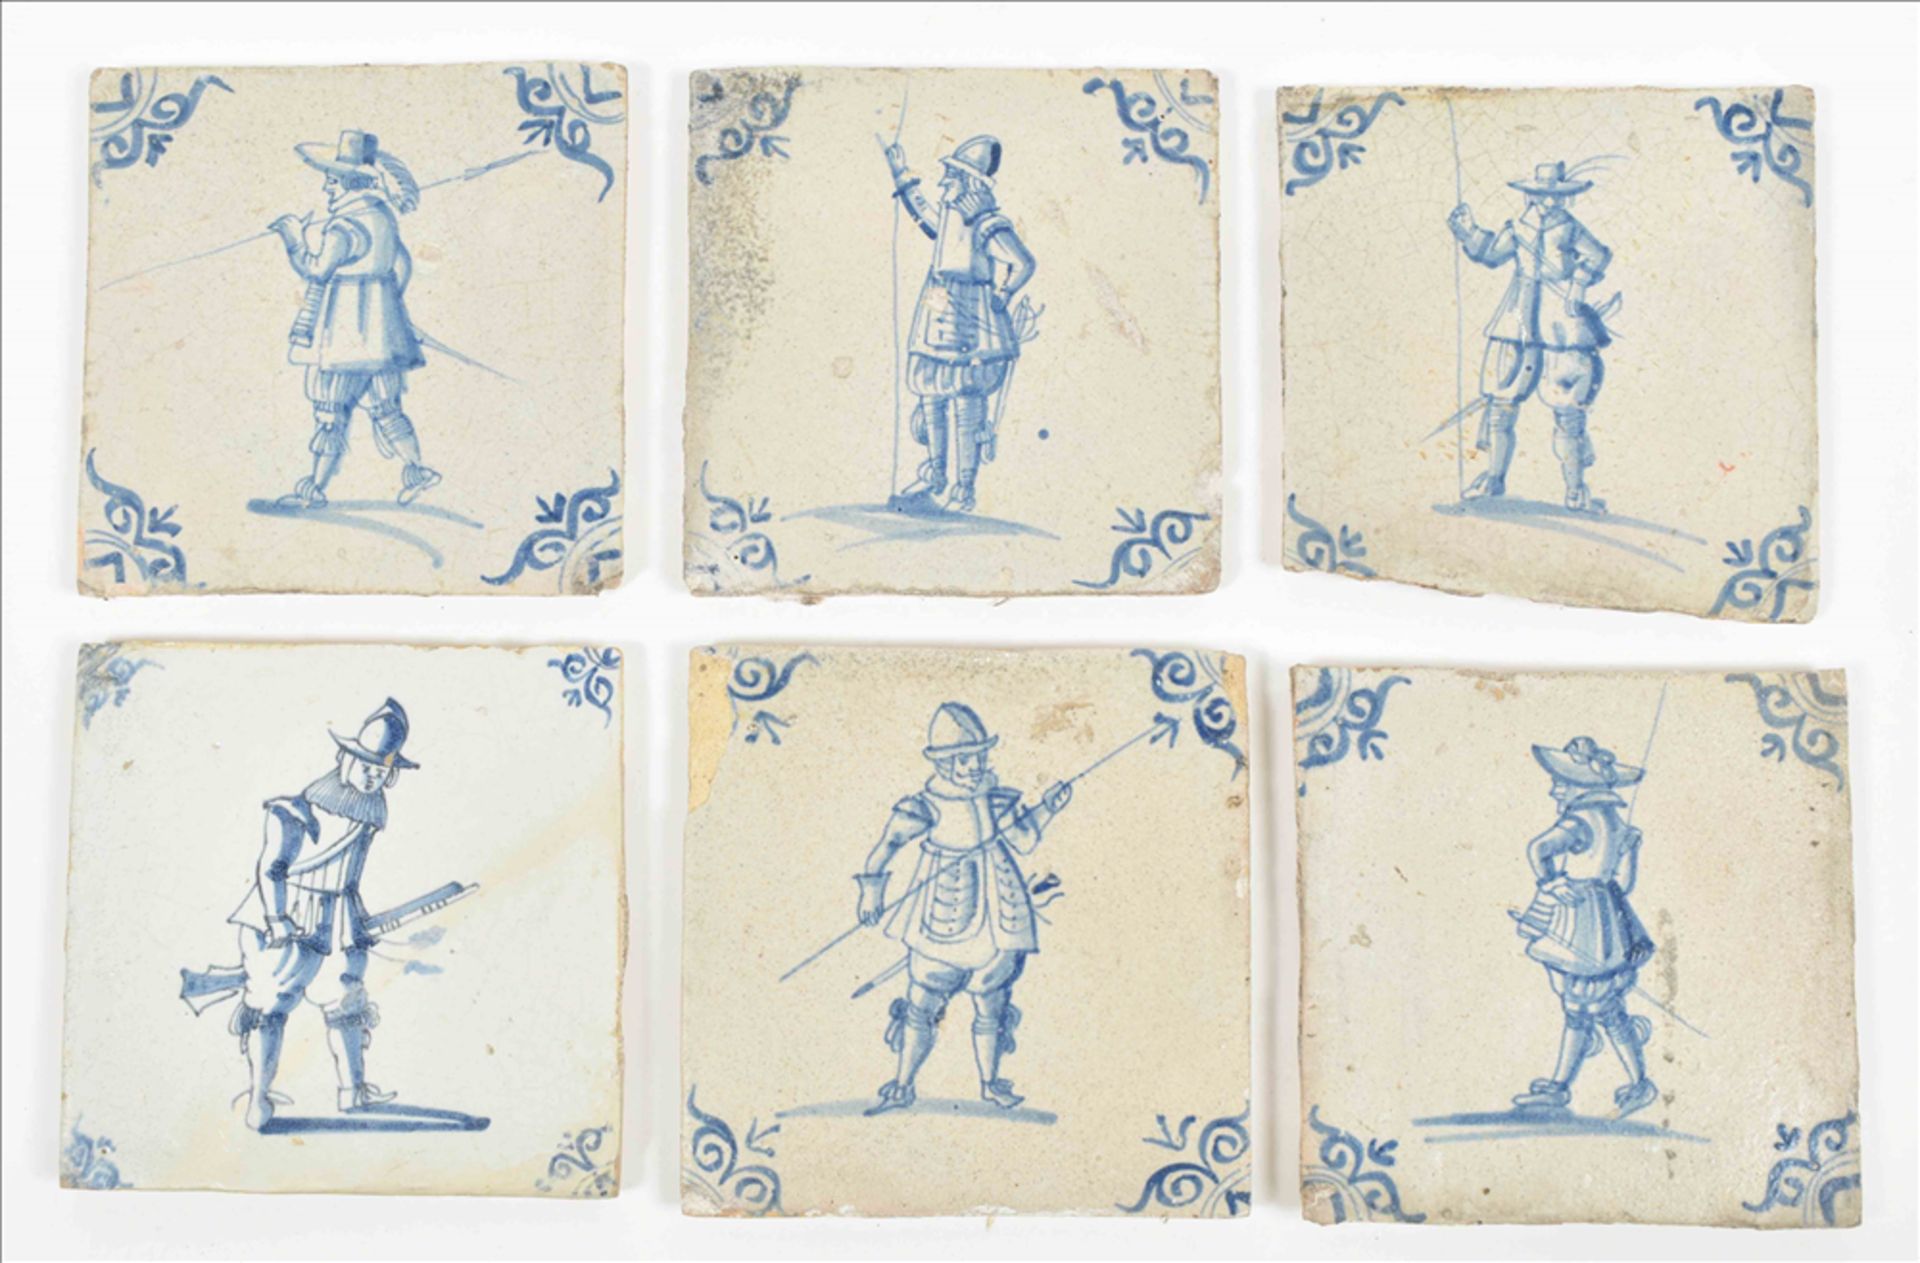 [Militaria] Twelve Dutch soldier tiles - Image 4 of 5